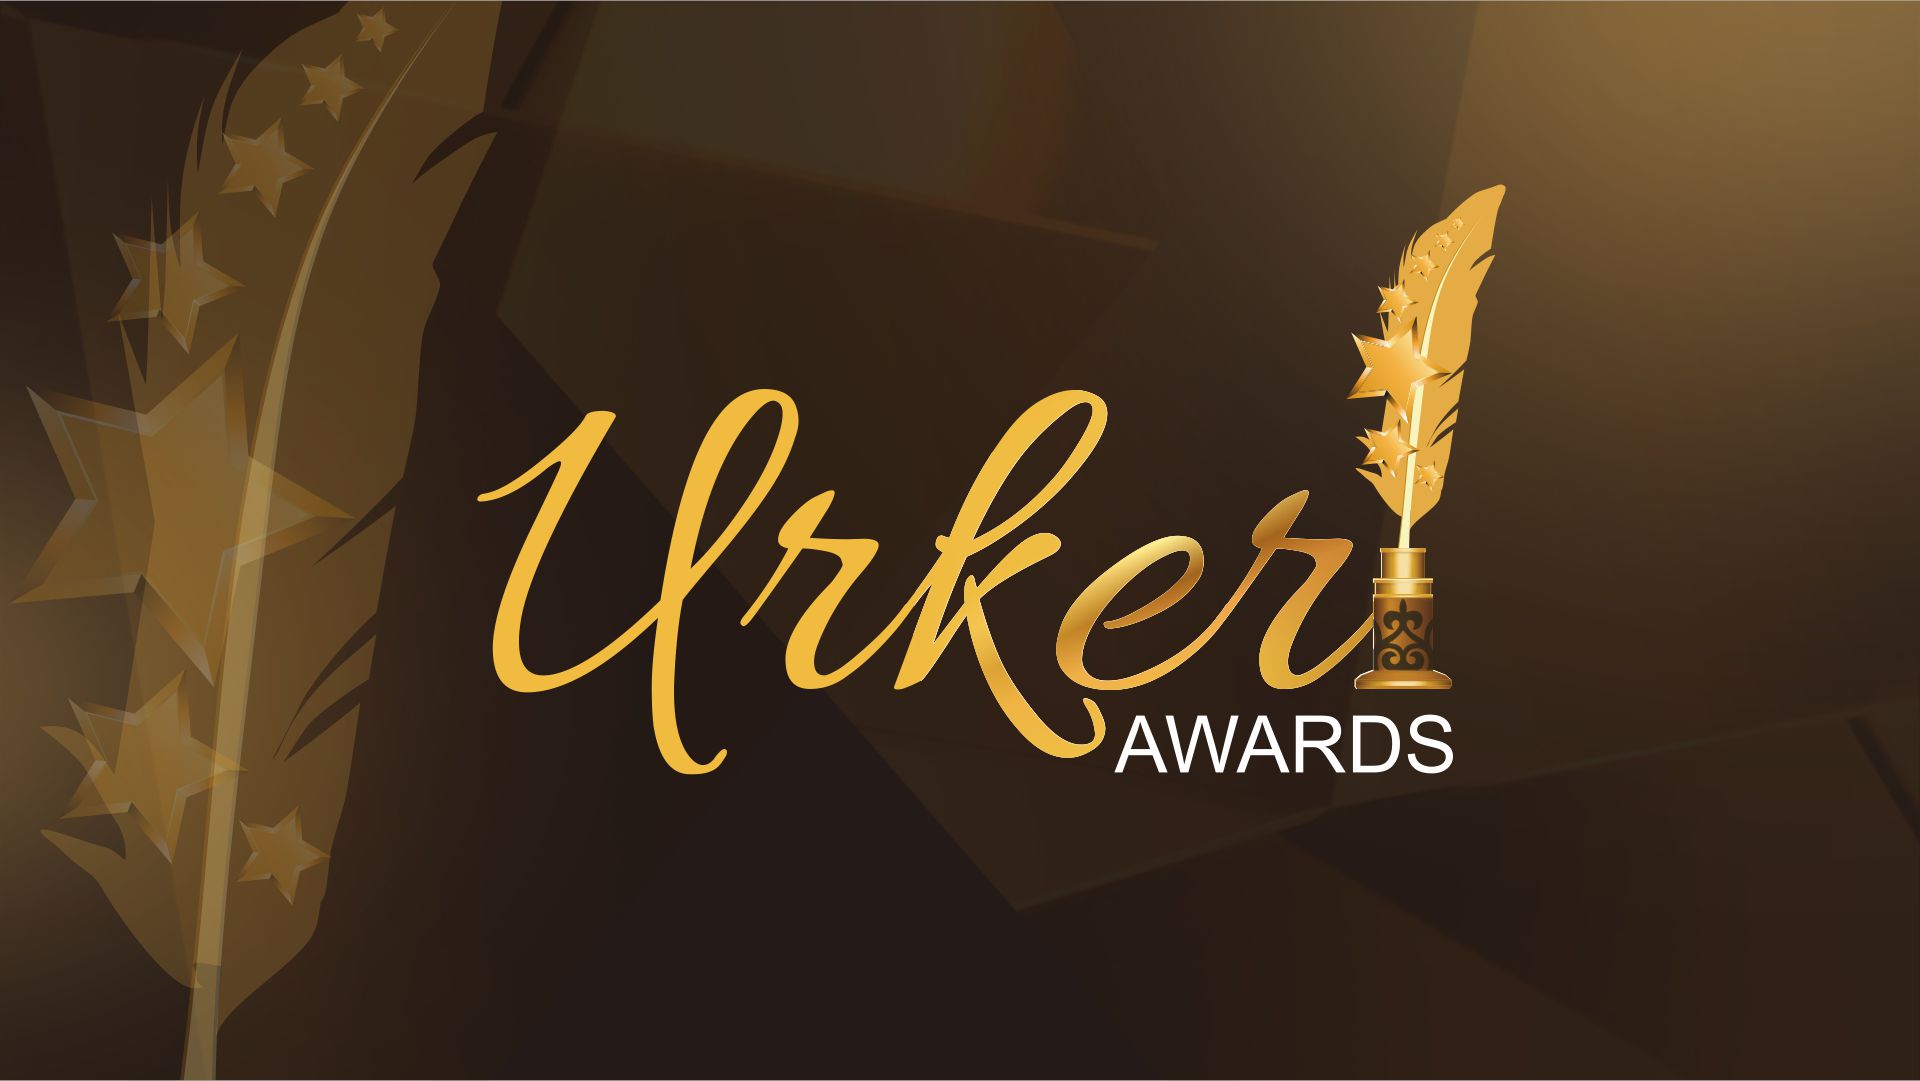 The national award "Urker"